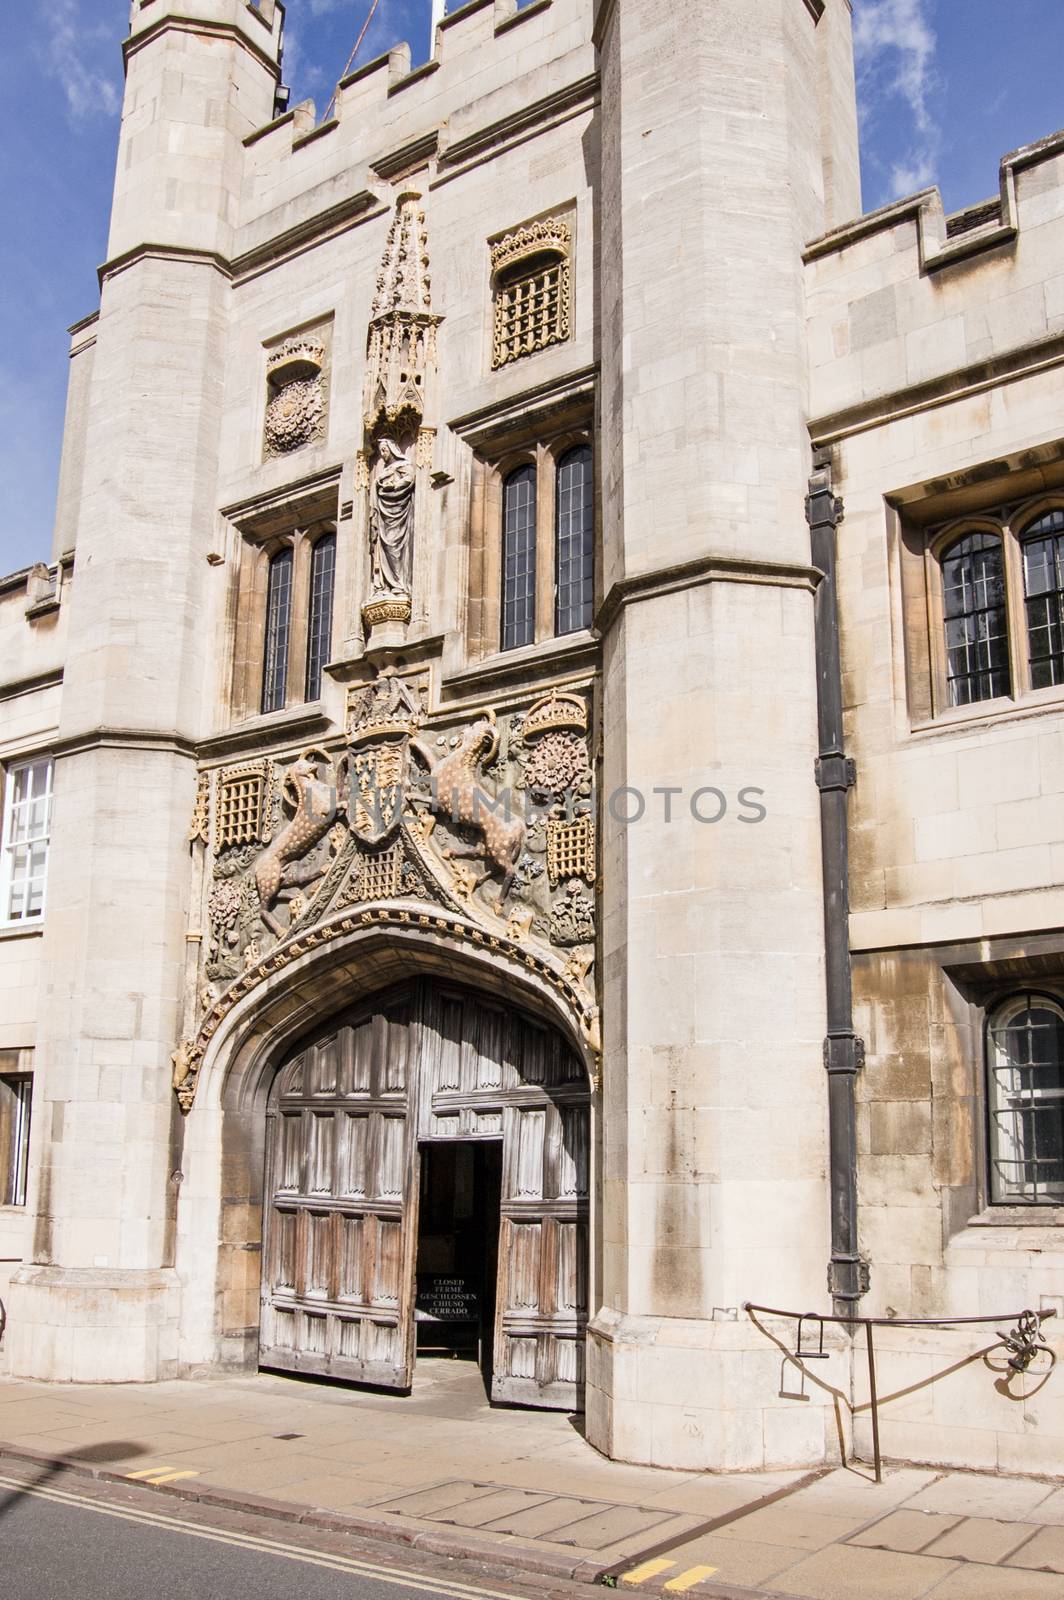 Christ's College, Cambridge by BasPhoto